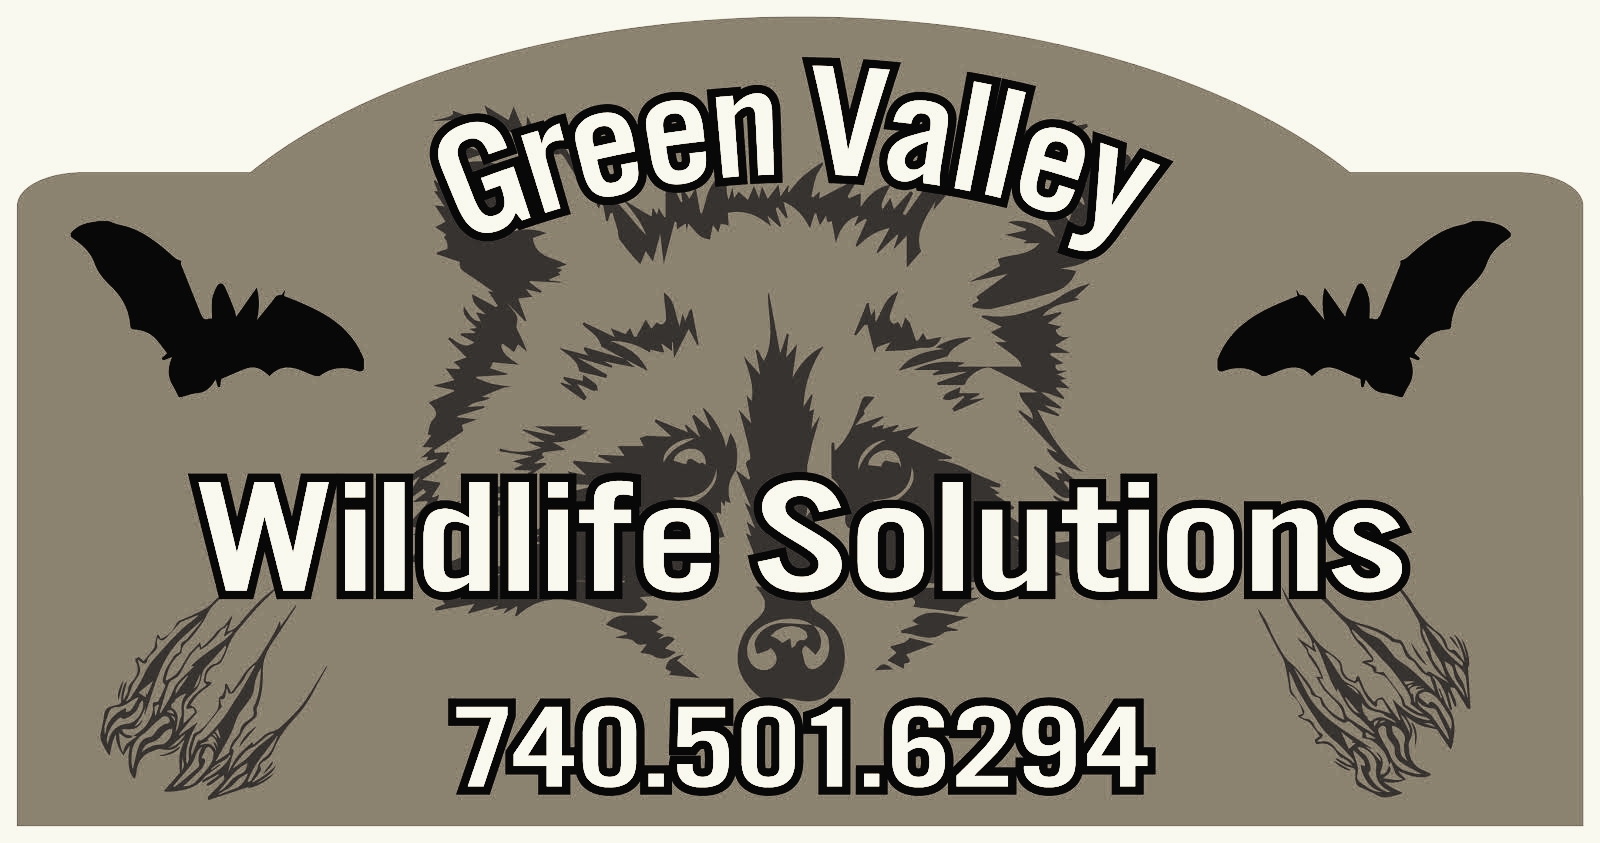 Green Valley Wildlife Solutions